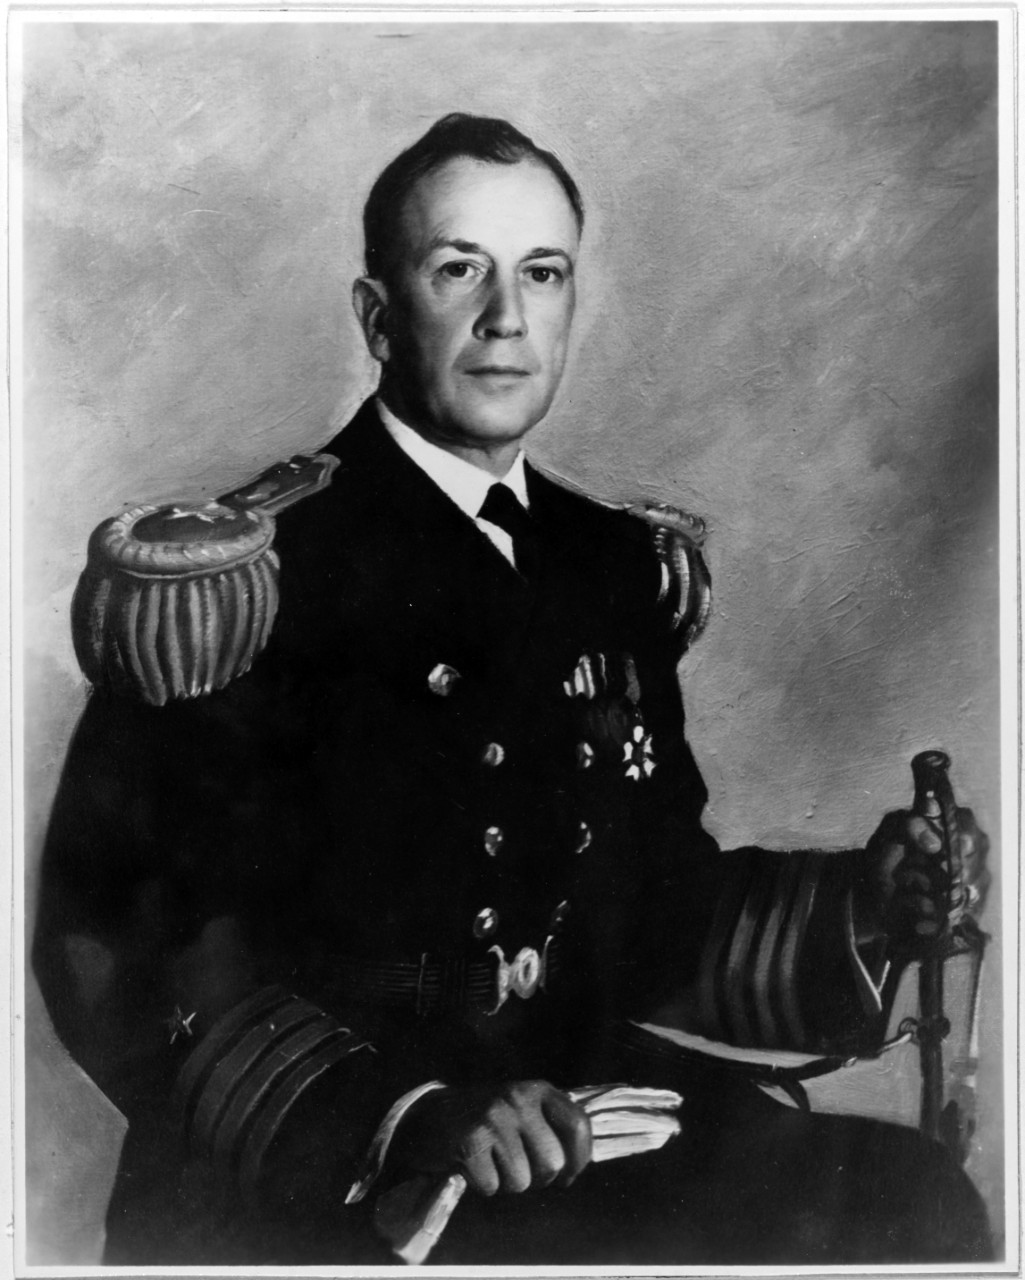 Captain Jules James, USN